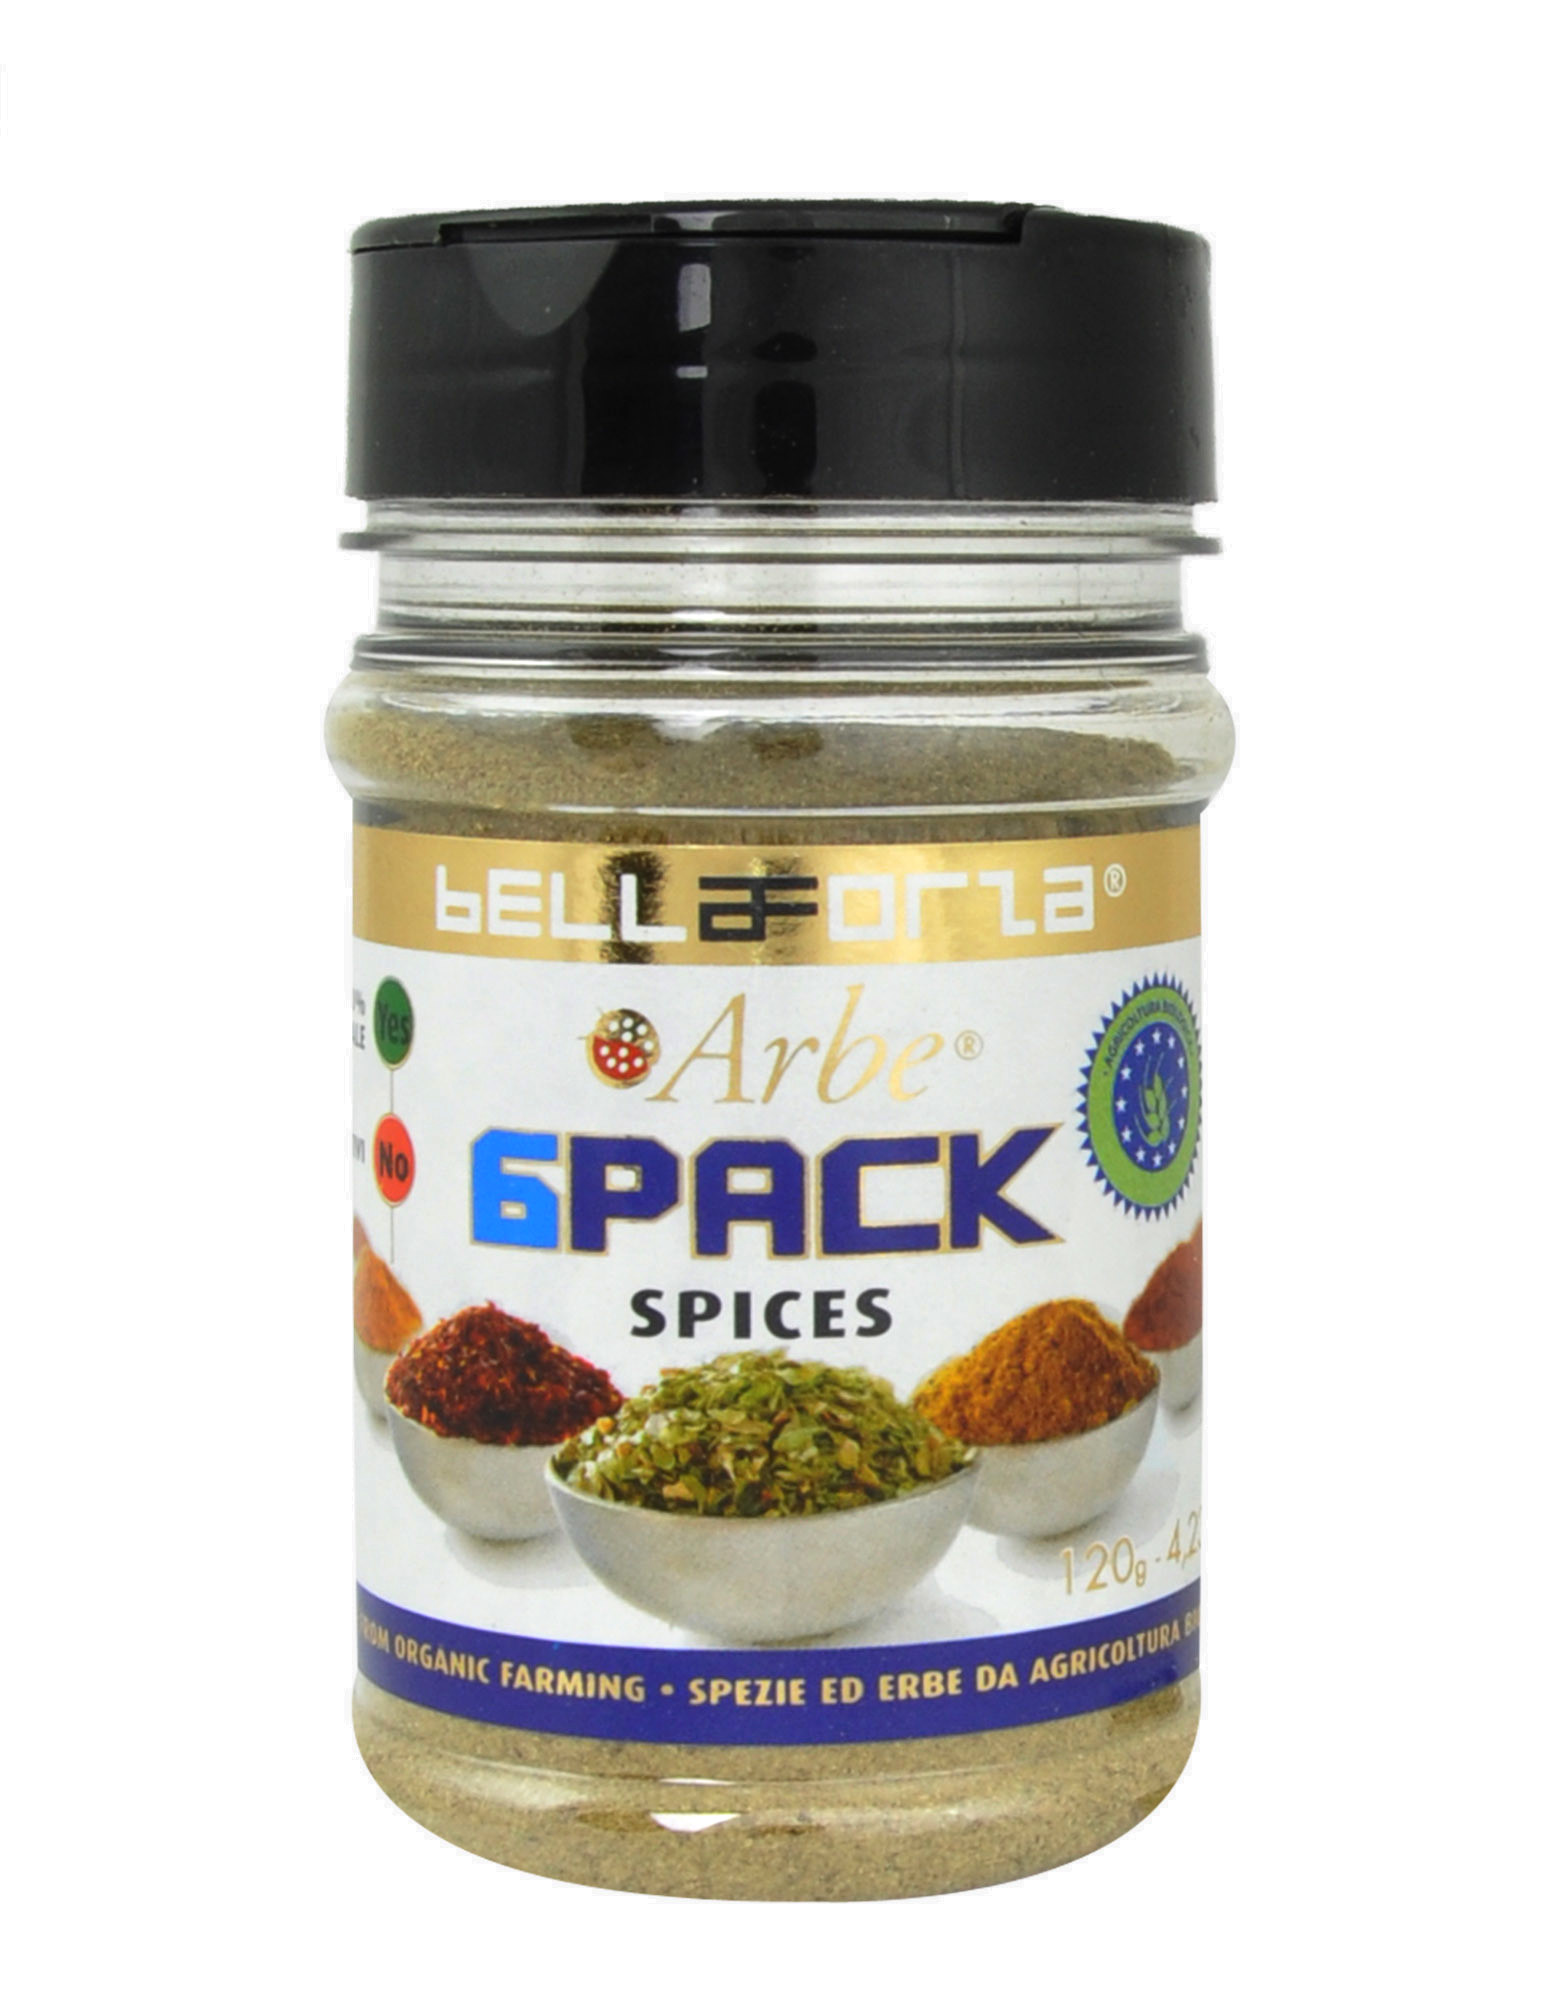 Bella Forza 6pack Spices Par Arbe 120 Grammes 